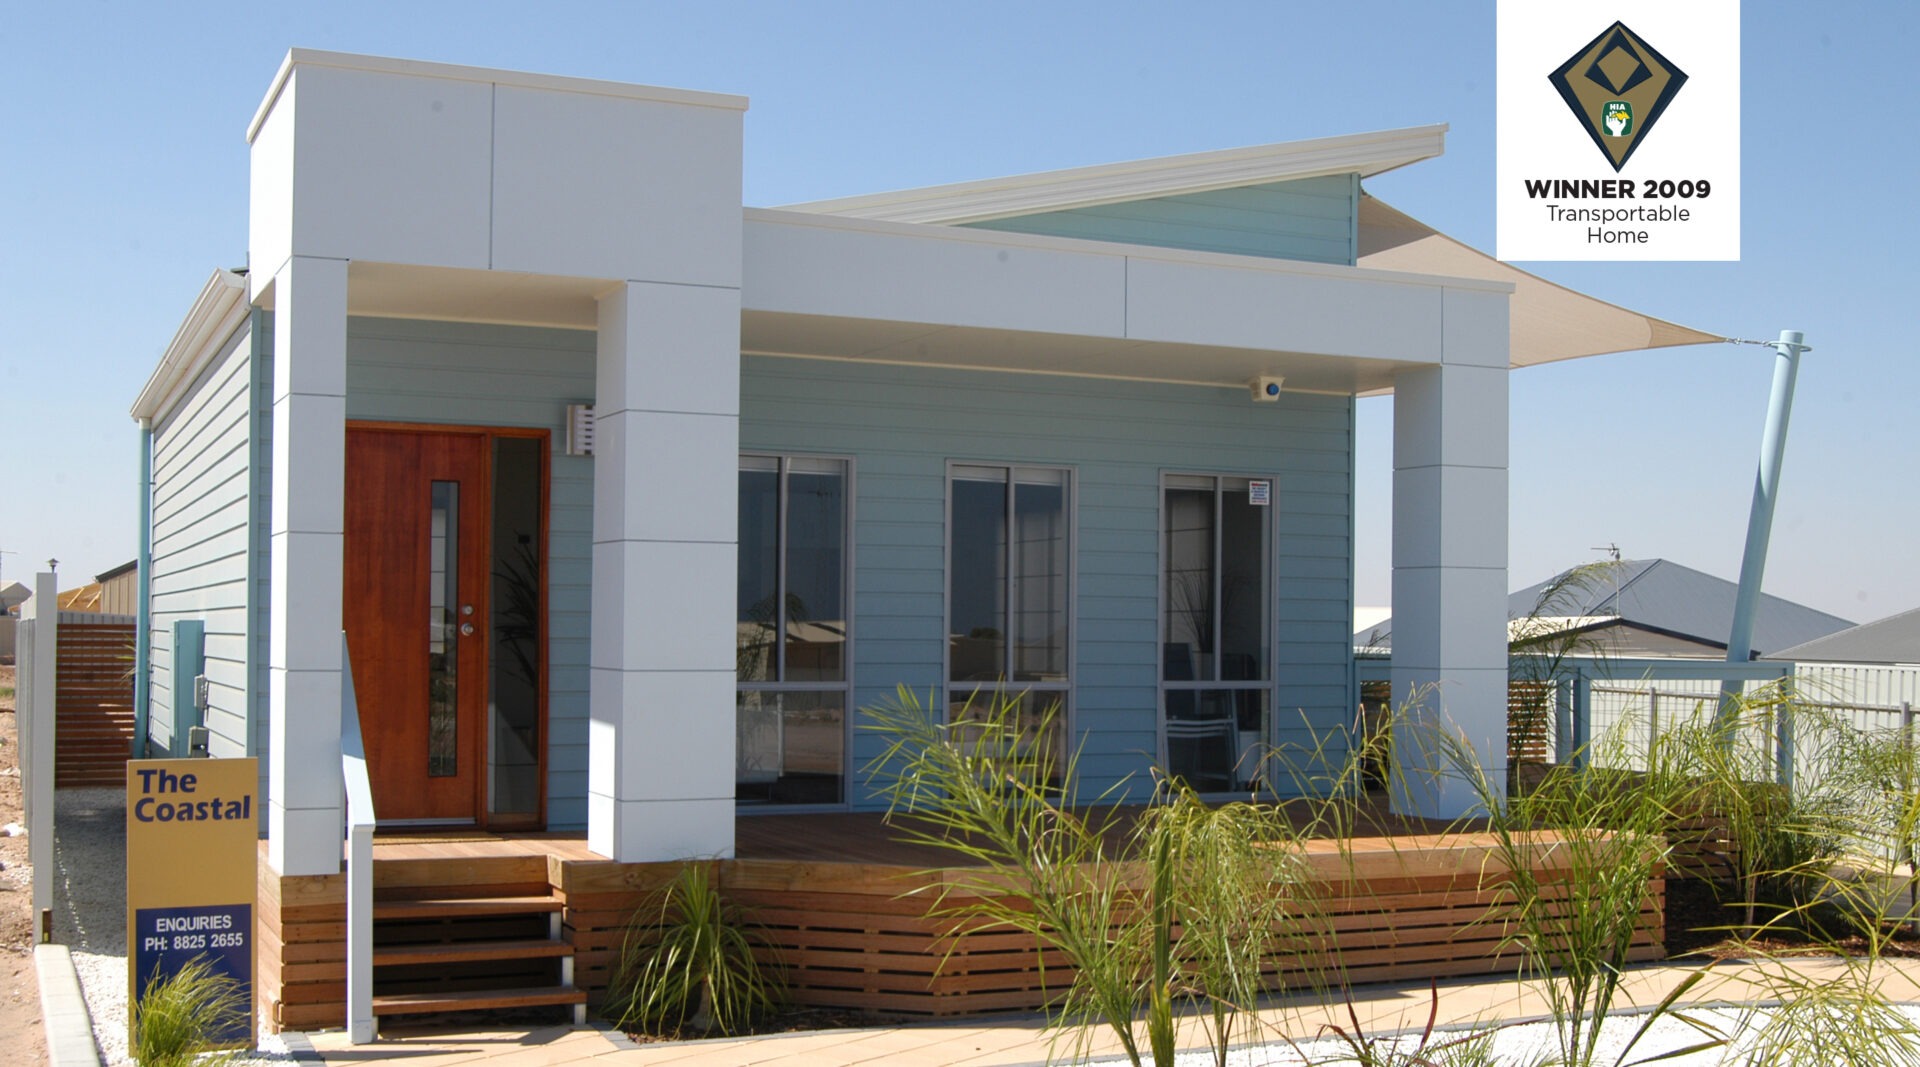 Image of the Coastal 3 house design